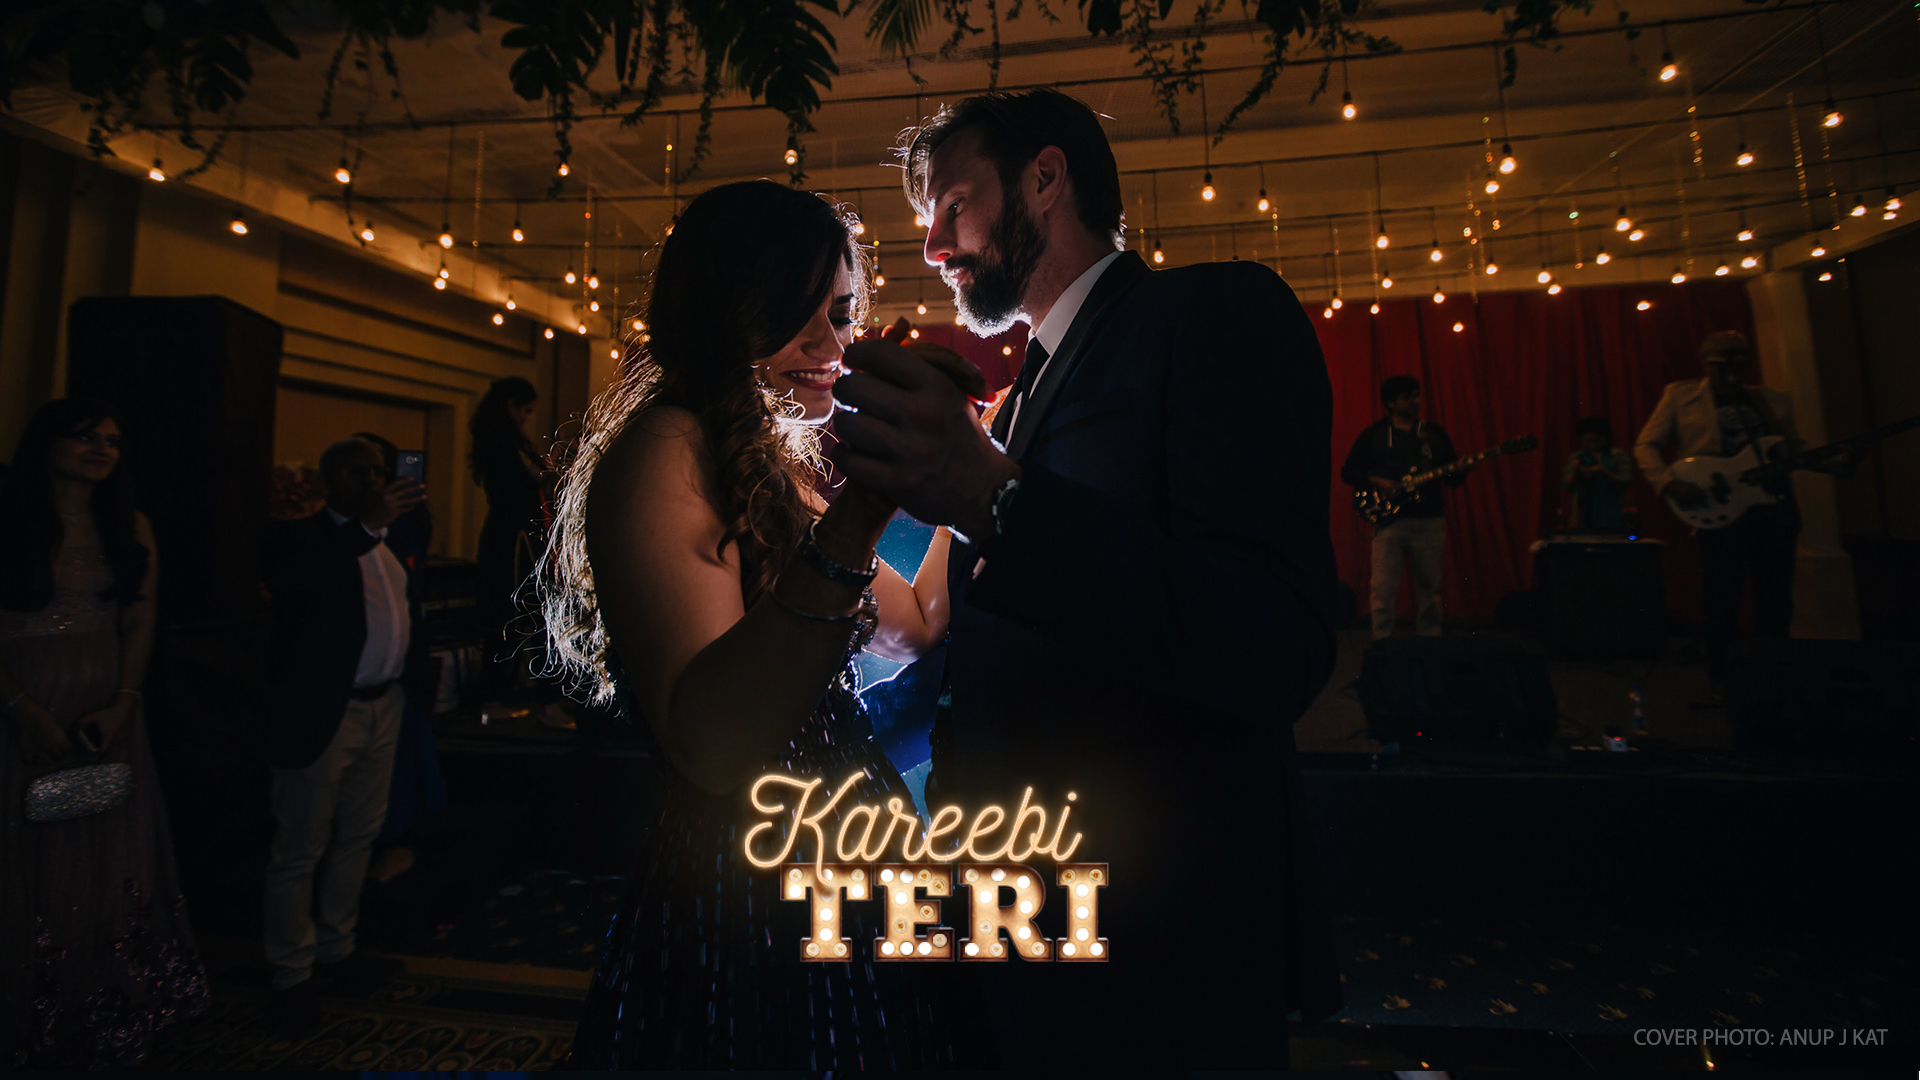 The Wedding Filmer - Kareebi Teri